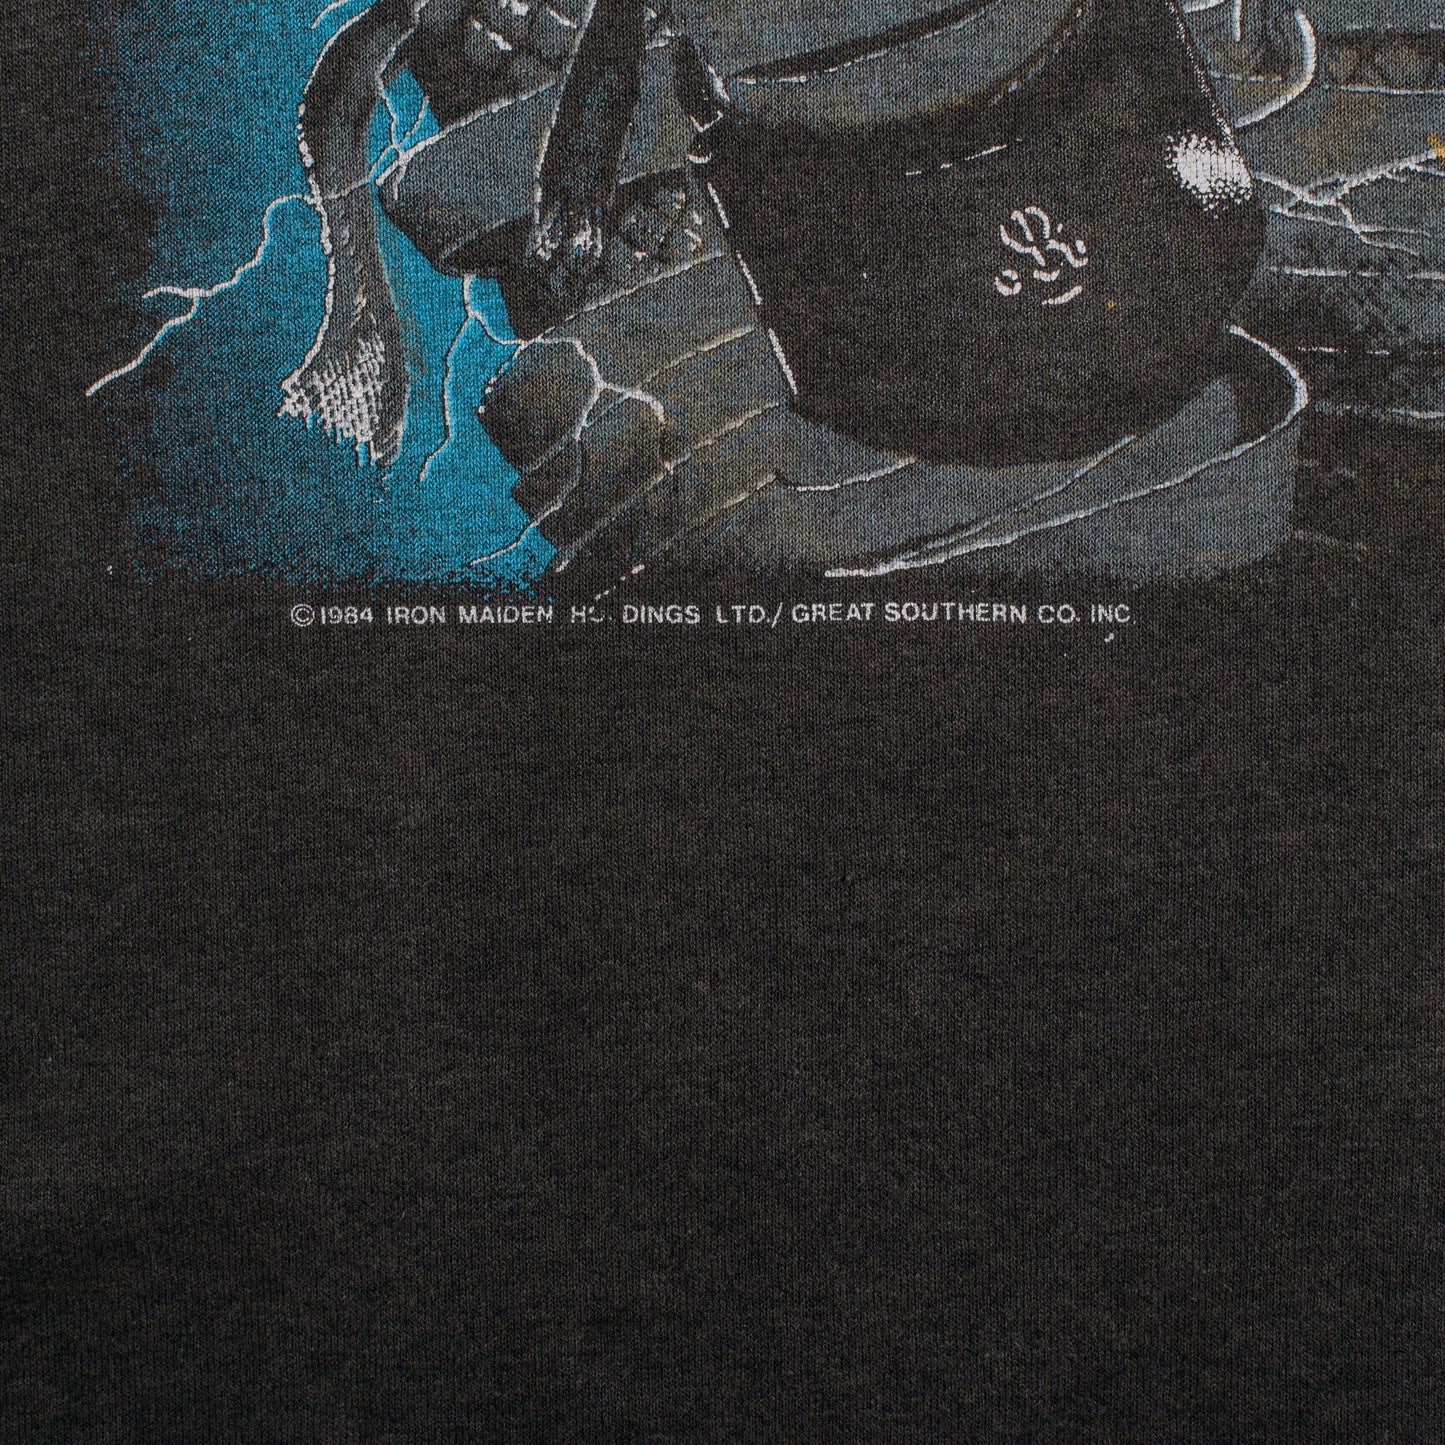 Vintage 1984 Iron Maiden Power Slave T-Shirt